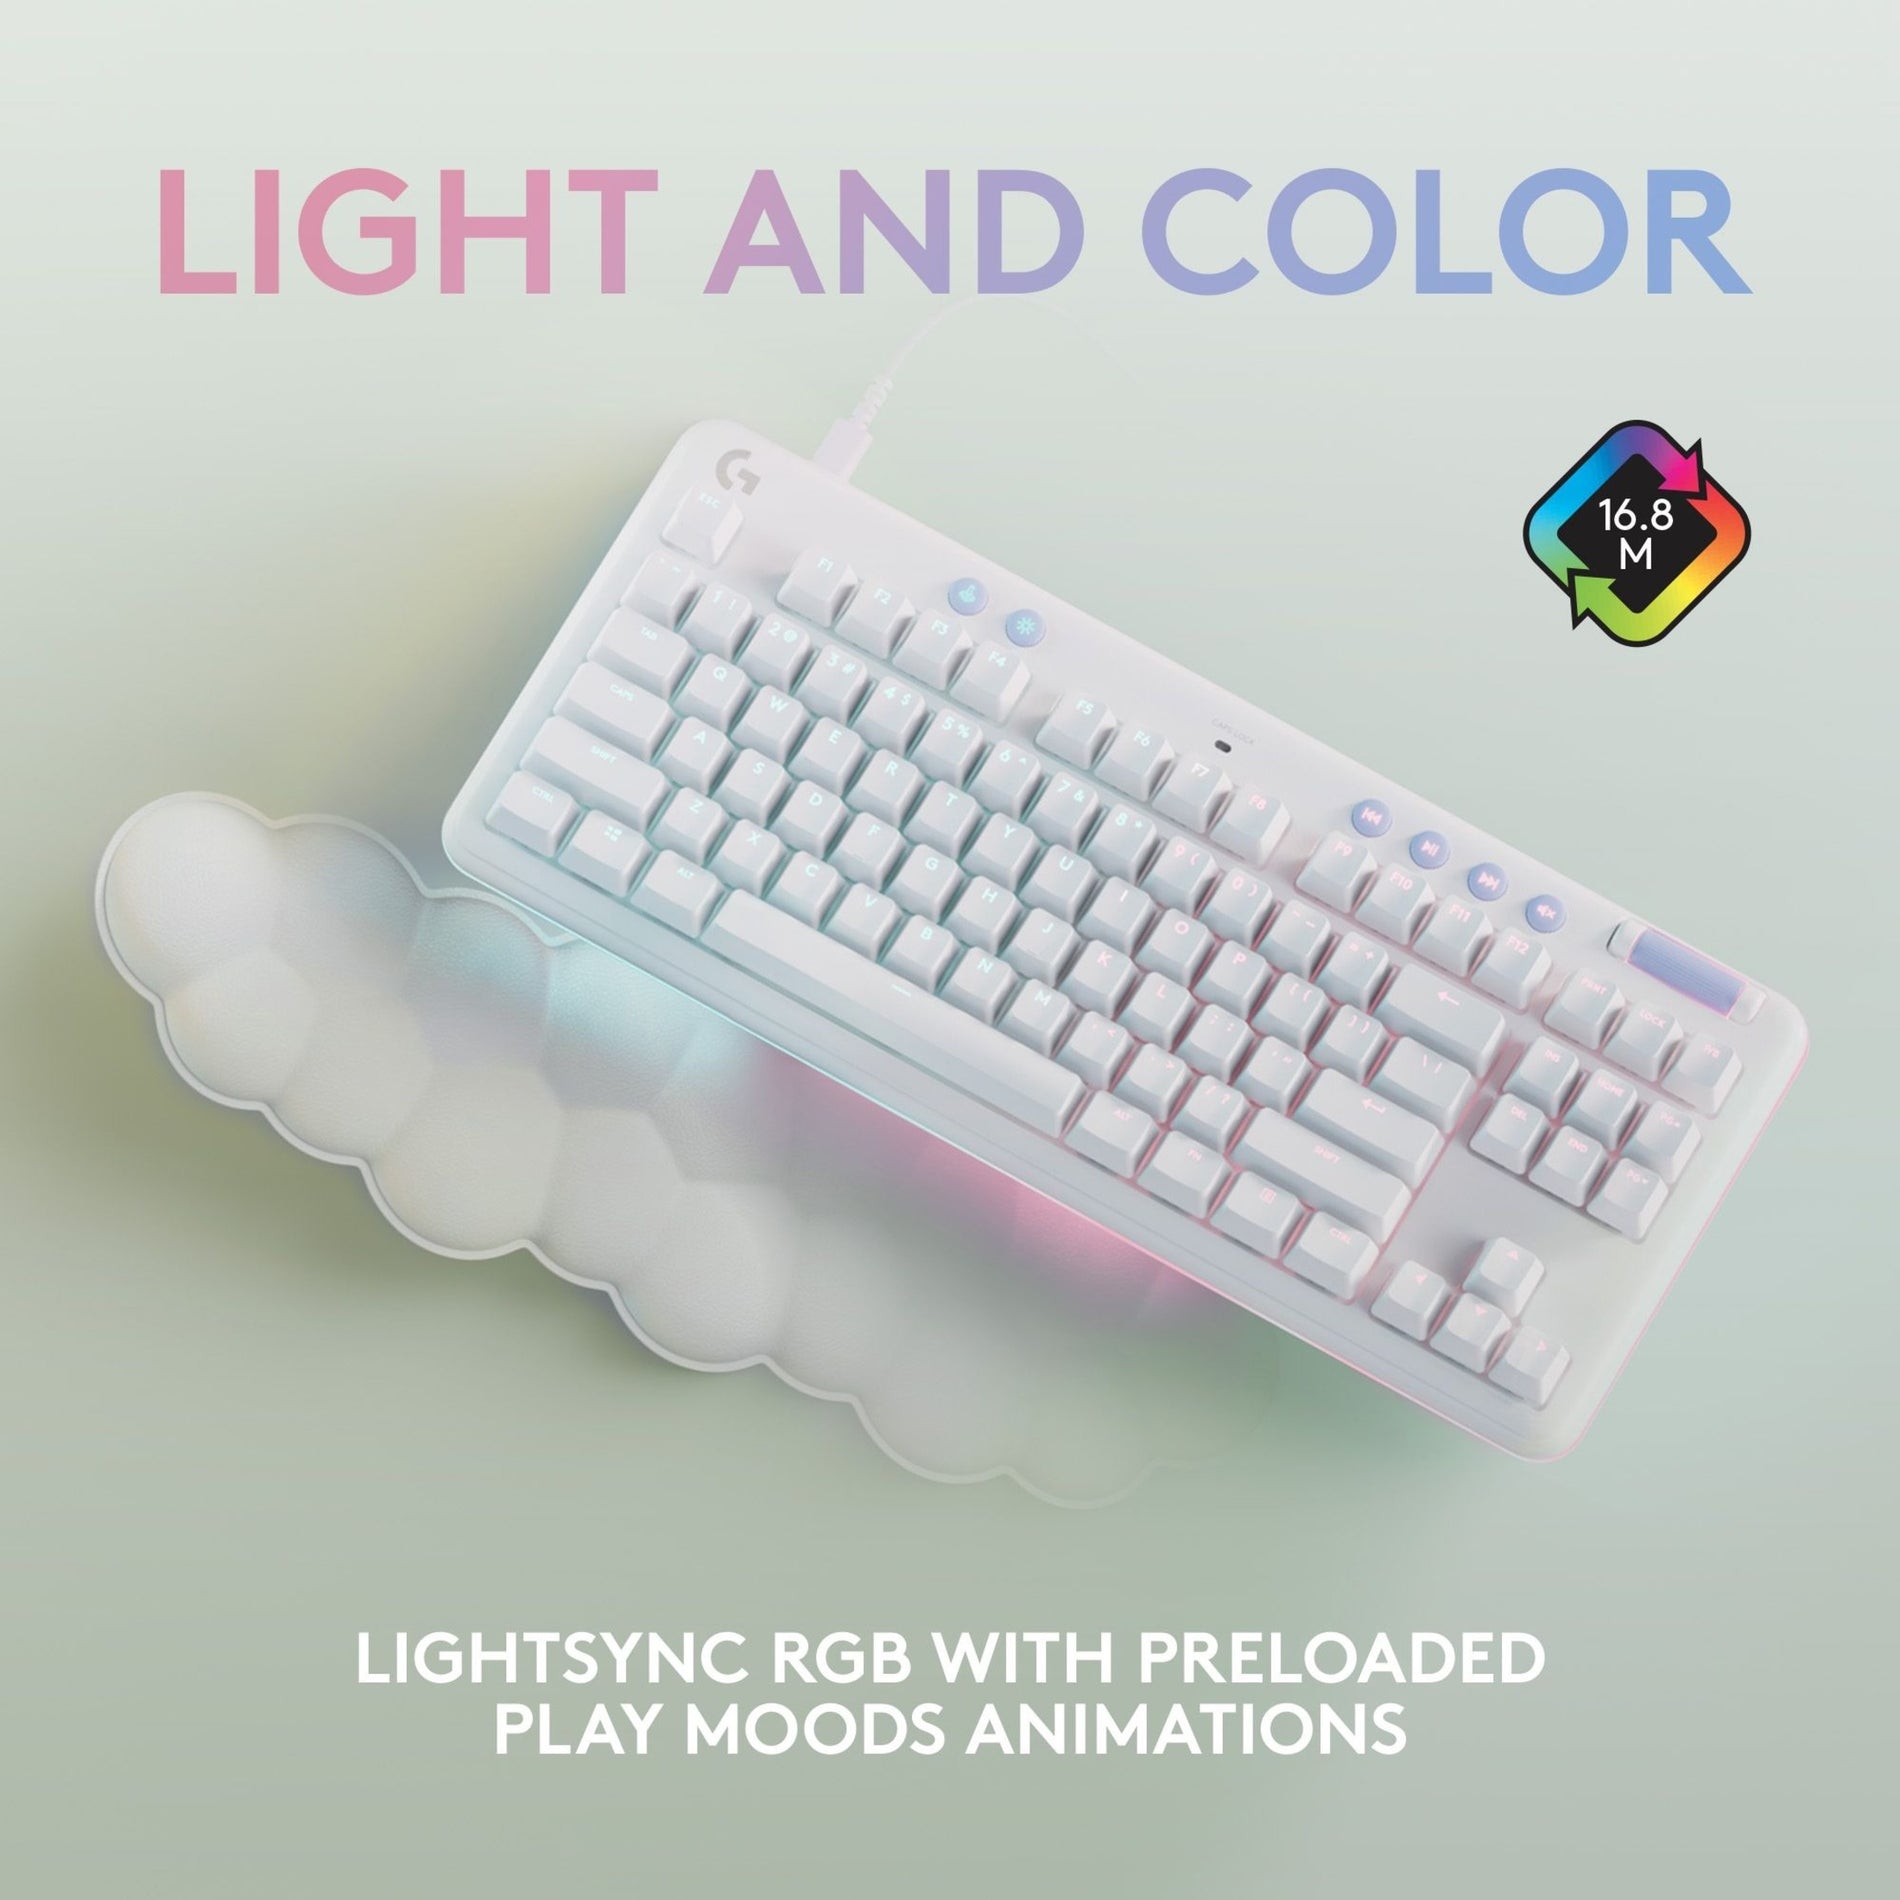 Logitech 920-010642 G713 Gaming Keyboard, RGB LED Backlight, Compact Keyboard